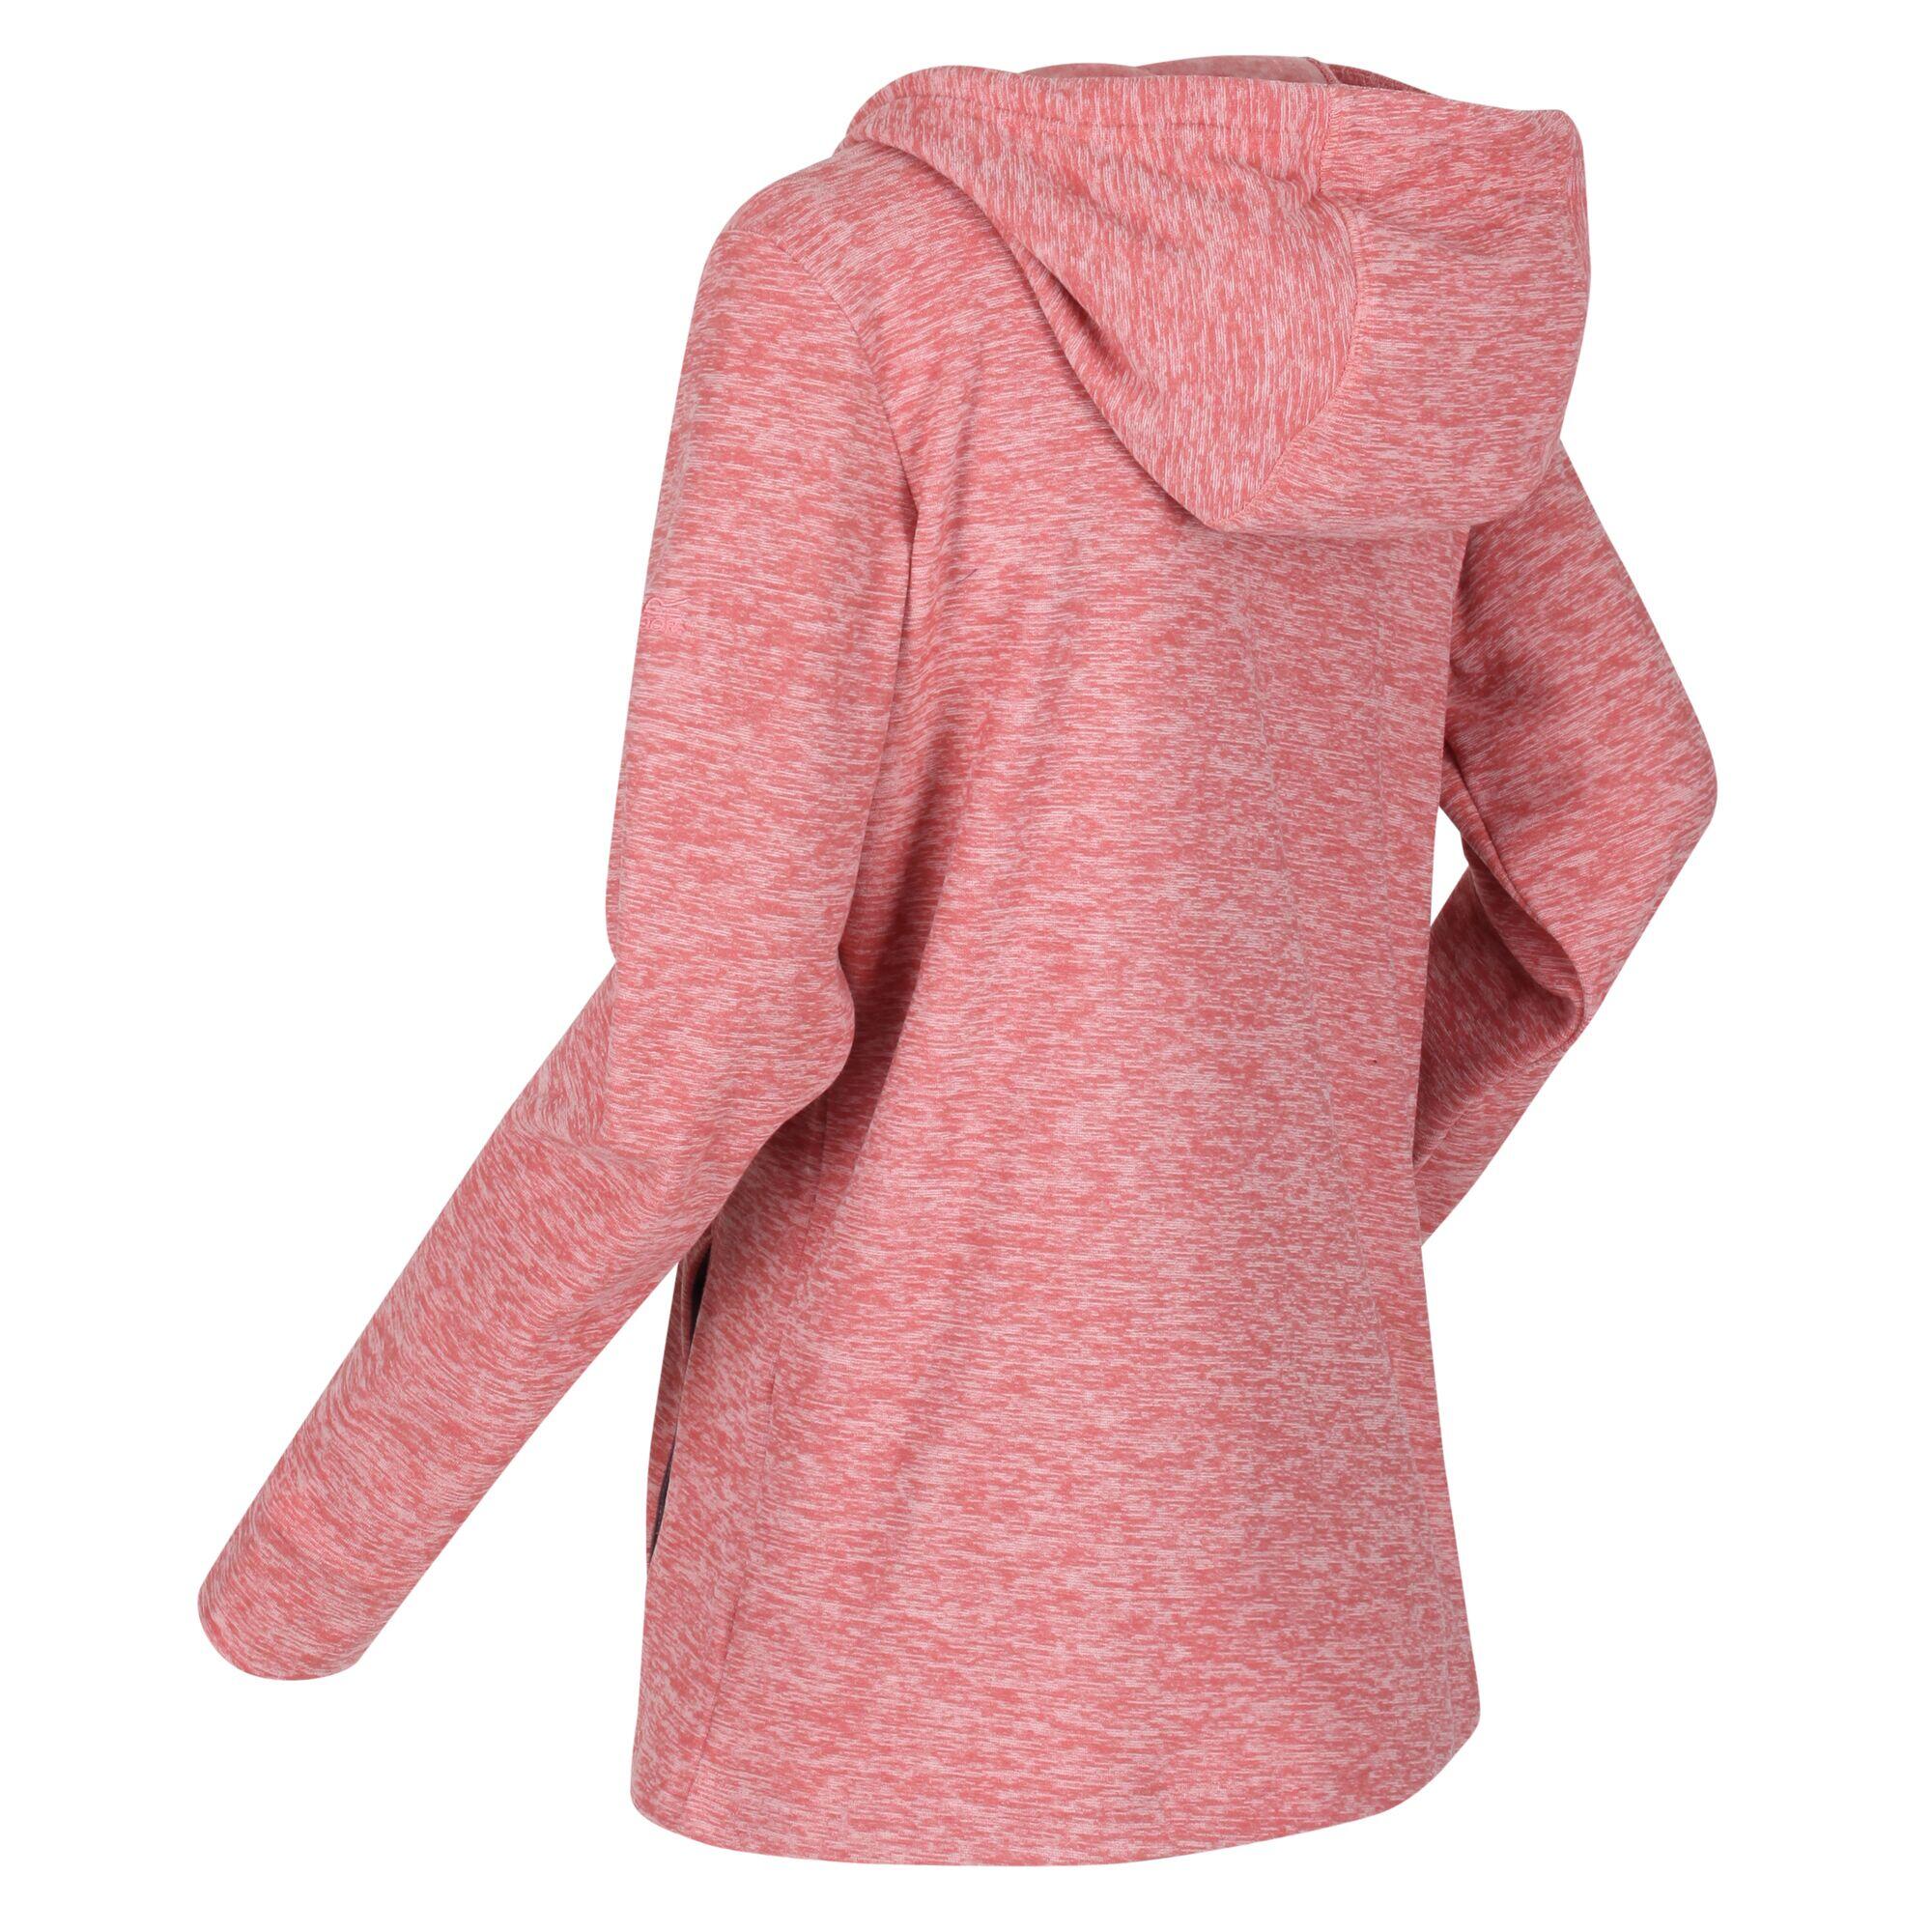 Kizmitt II Women's Hiking Hooded Fleece - Pale Pink 5/5